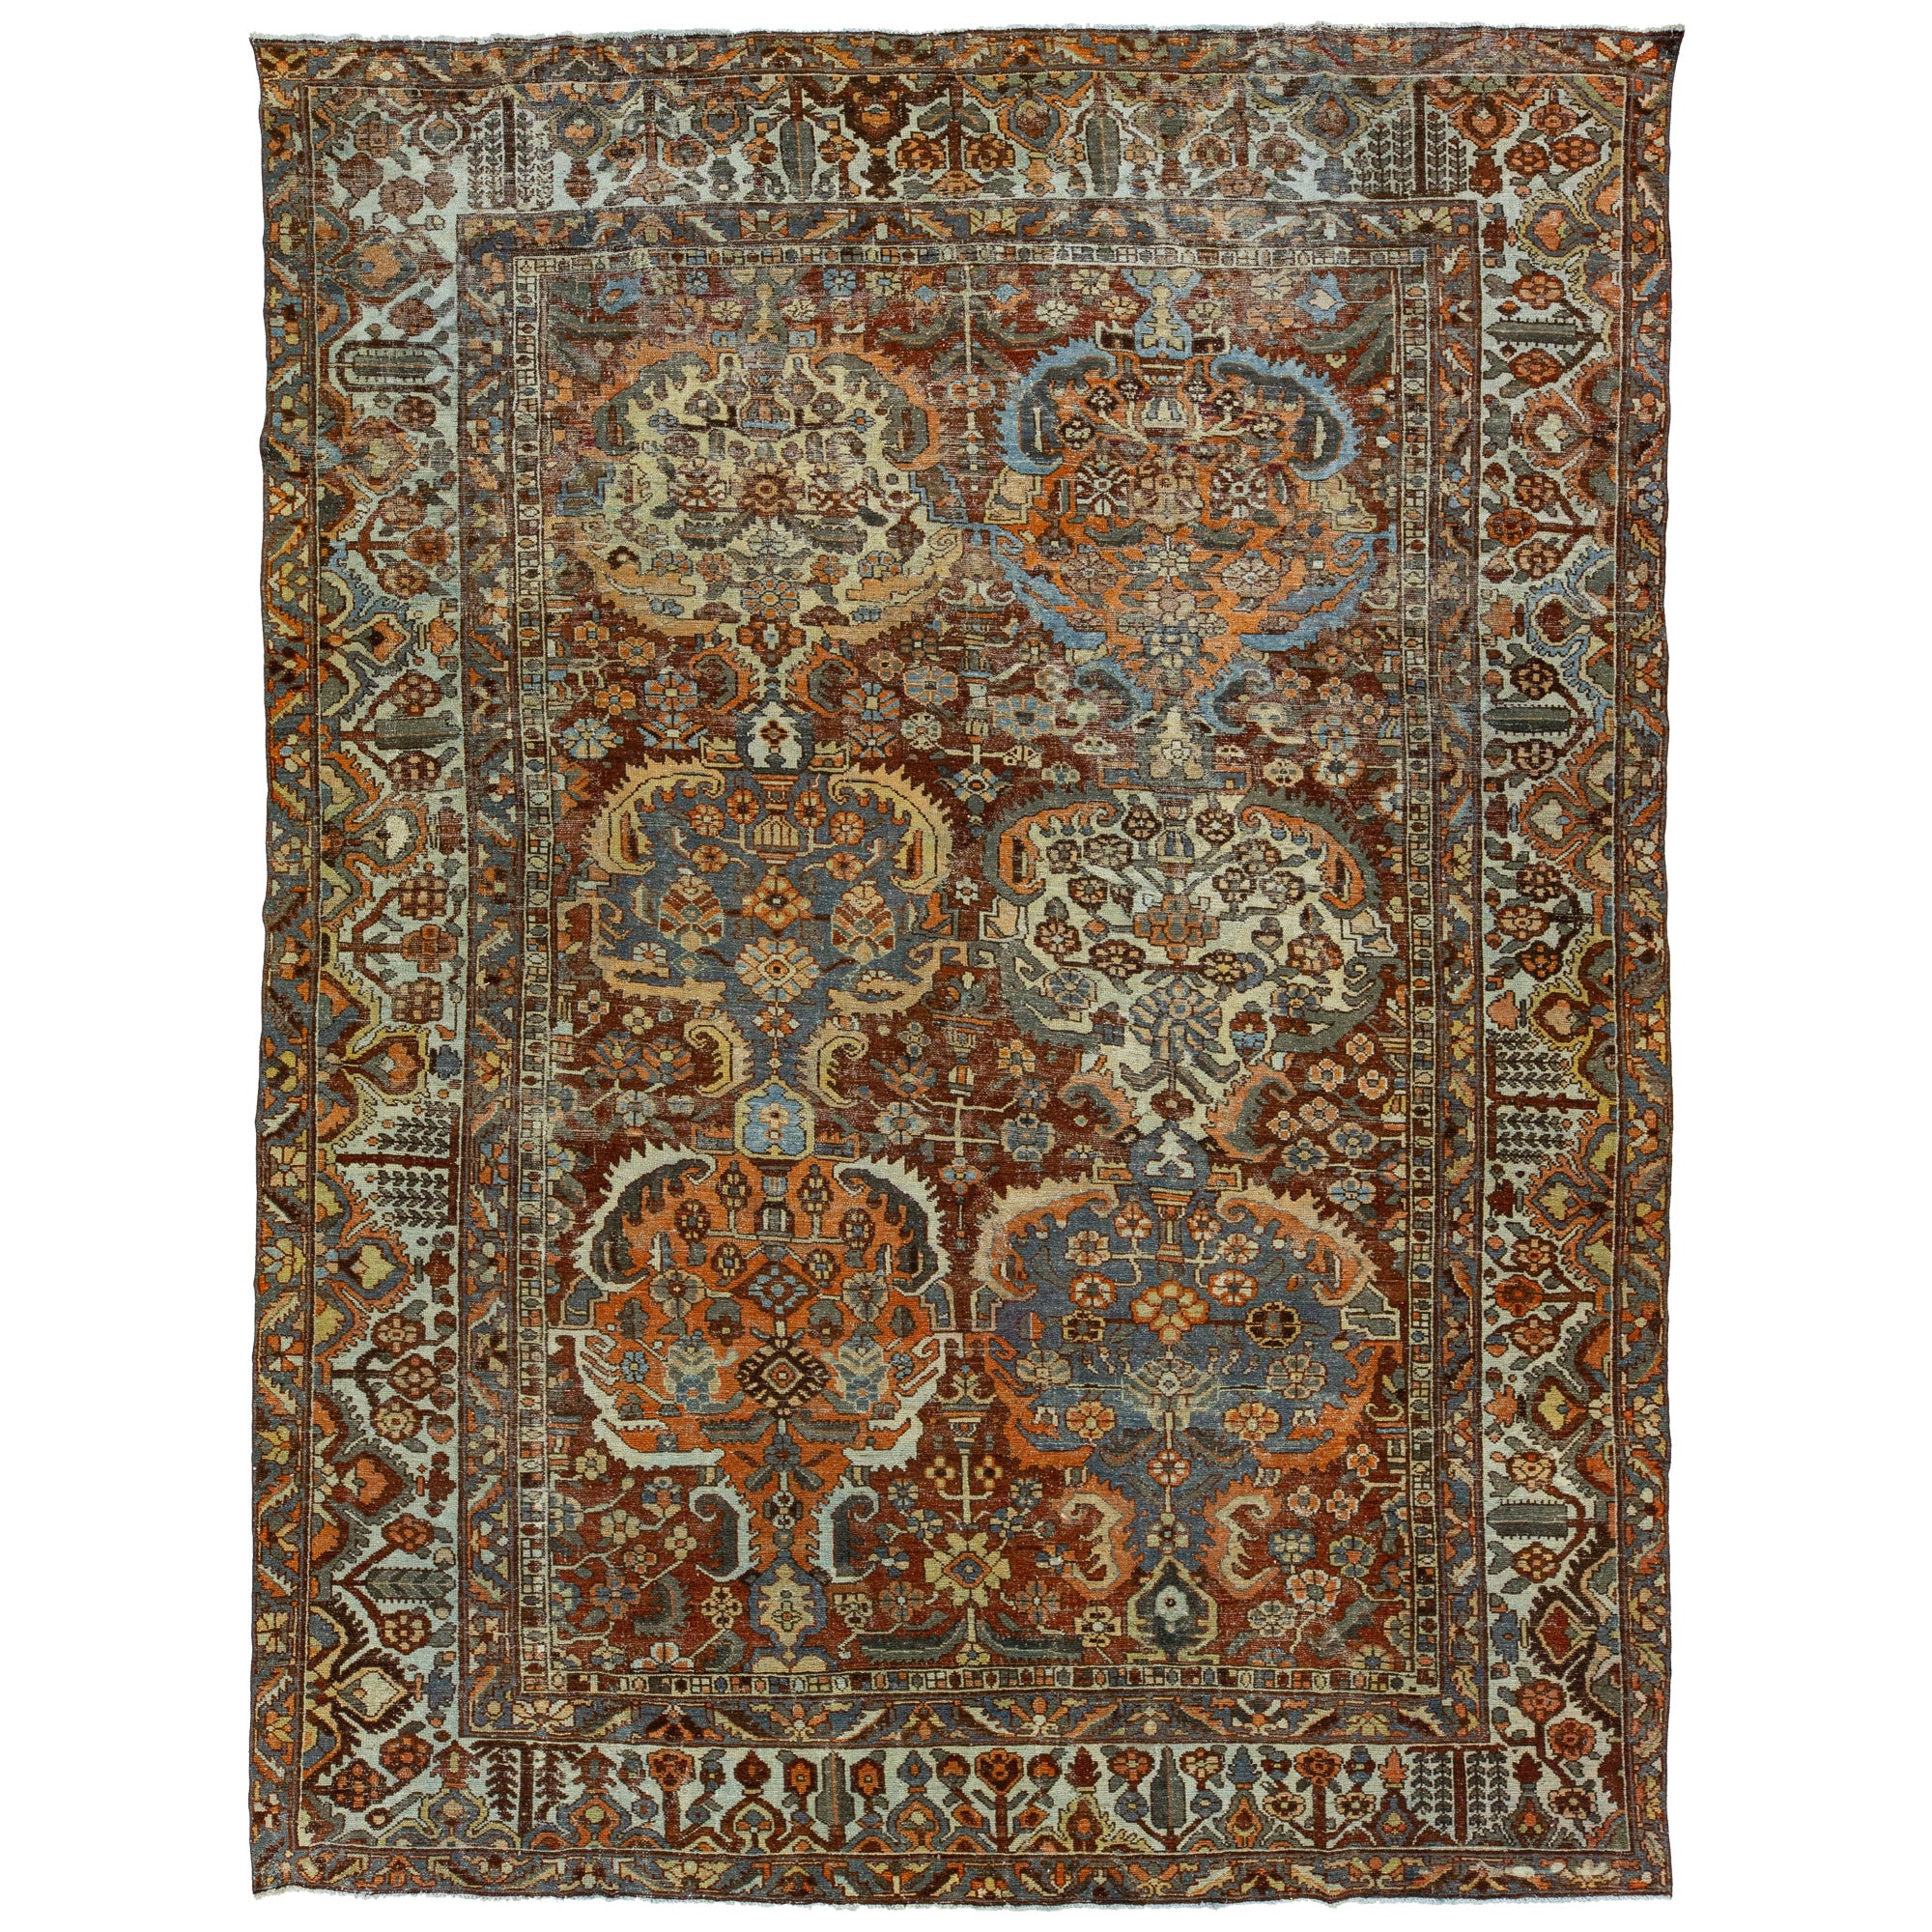 Antique Room Size Persian Bakhtiari Wool Rug Handmade In Red-Rust Color 